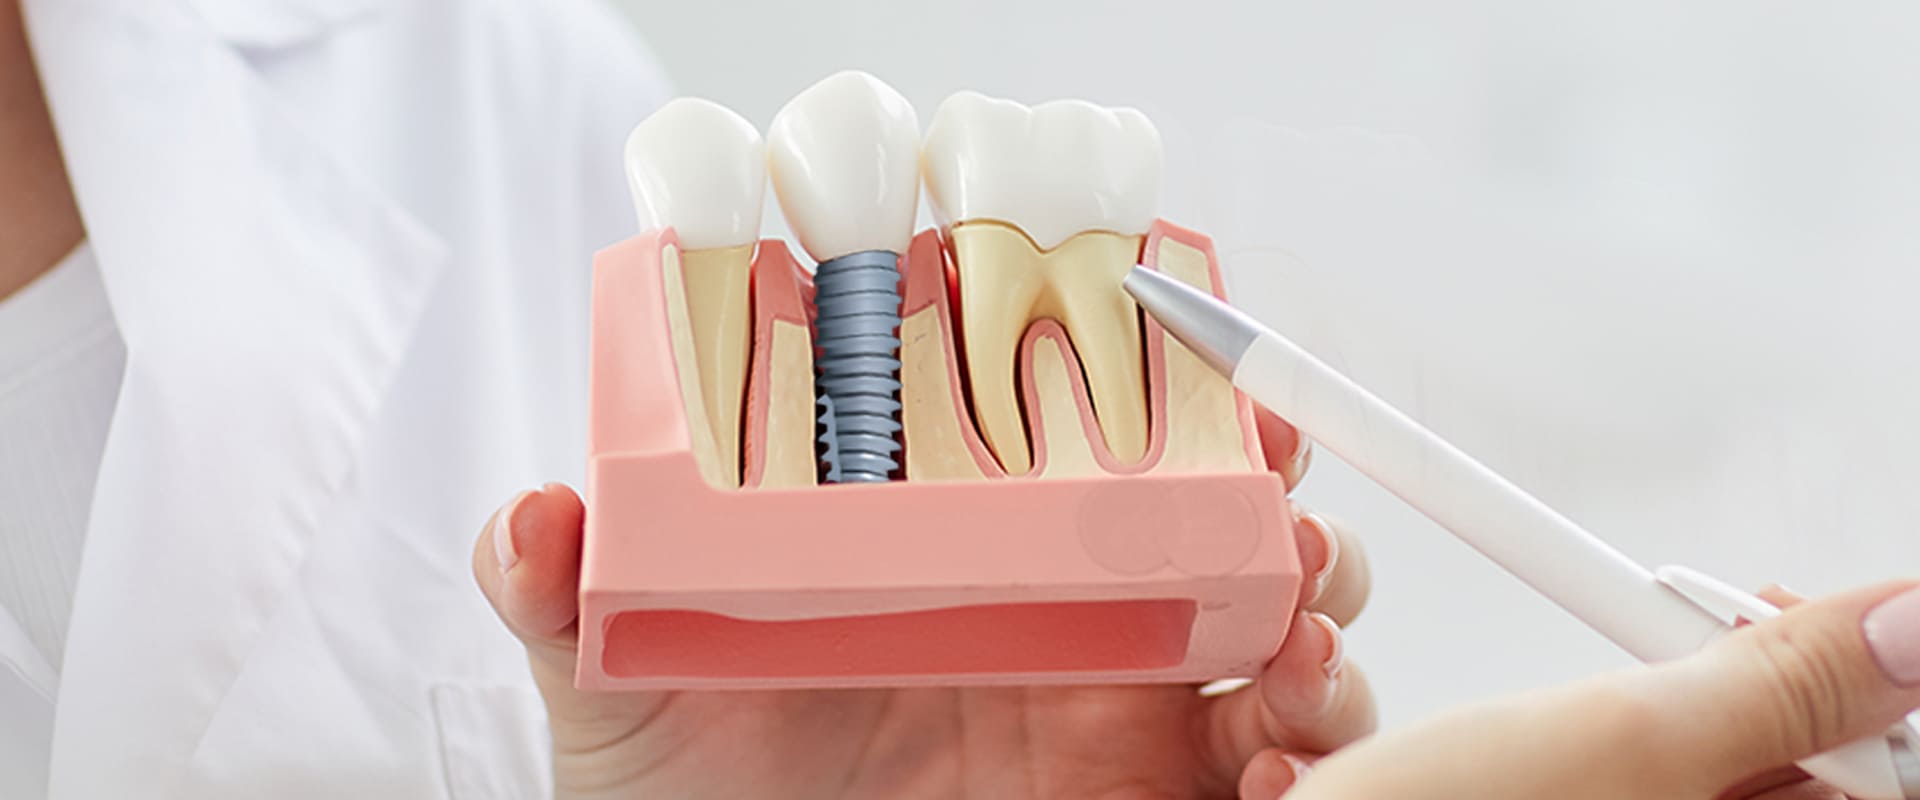 dental implants manufacturer in india